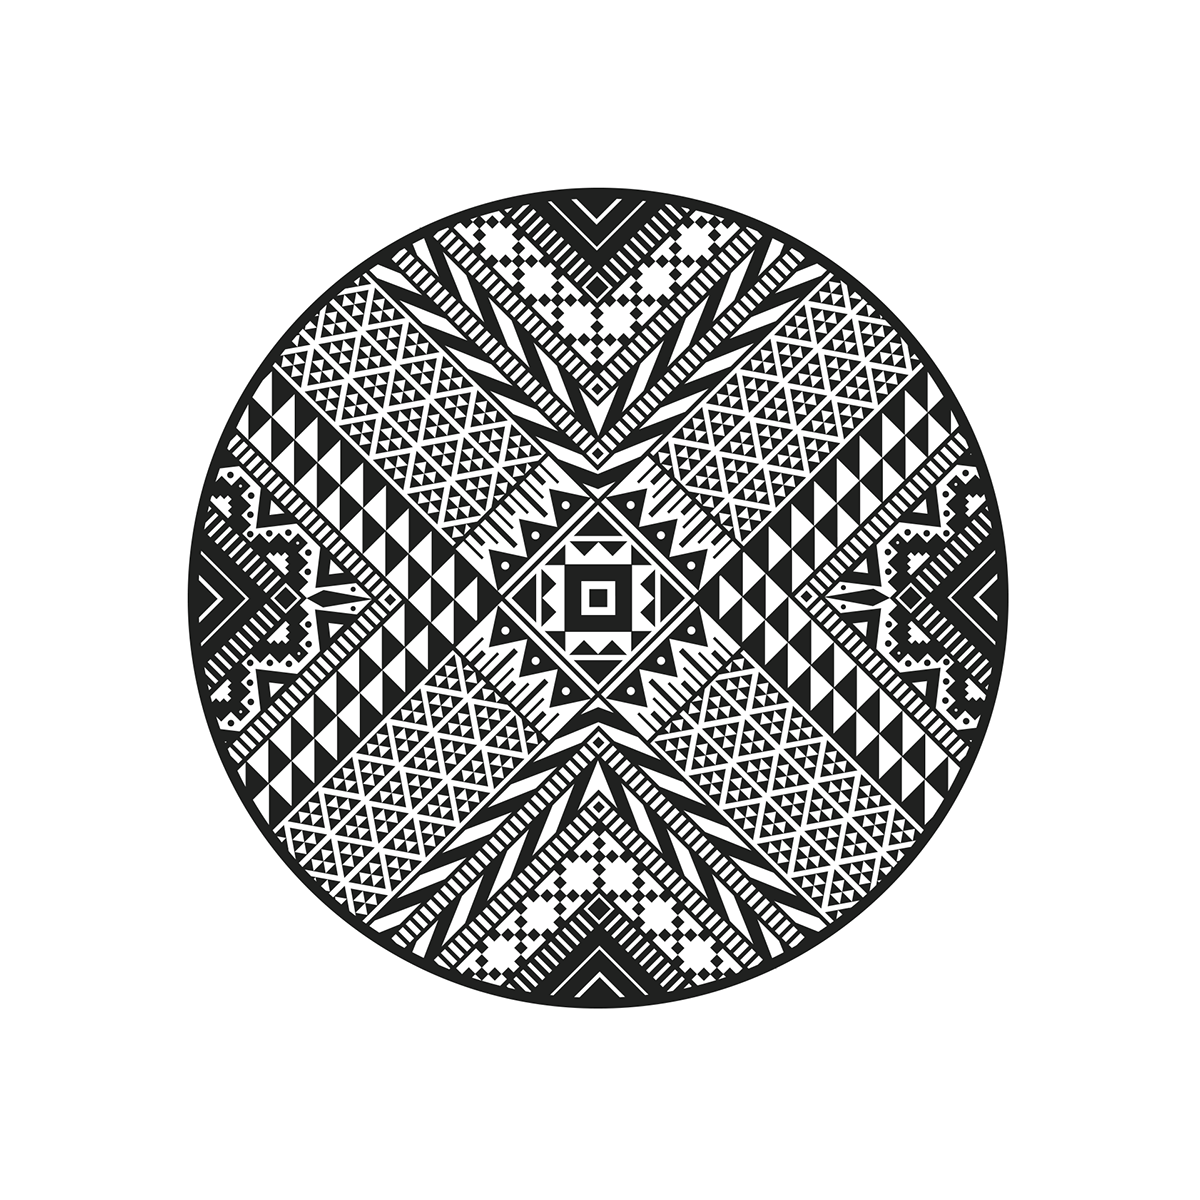 #patterns #patternart #art #DigitalArt Mandala Mandalas mandalastorytellers Icondesign icons characters storytelling   artwork sacredgeometry sacredart   circles